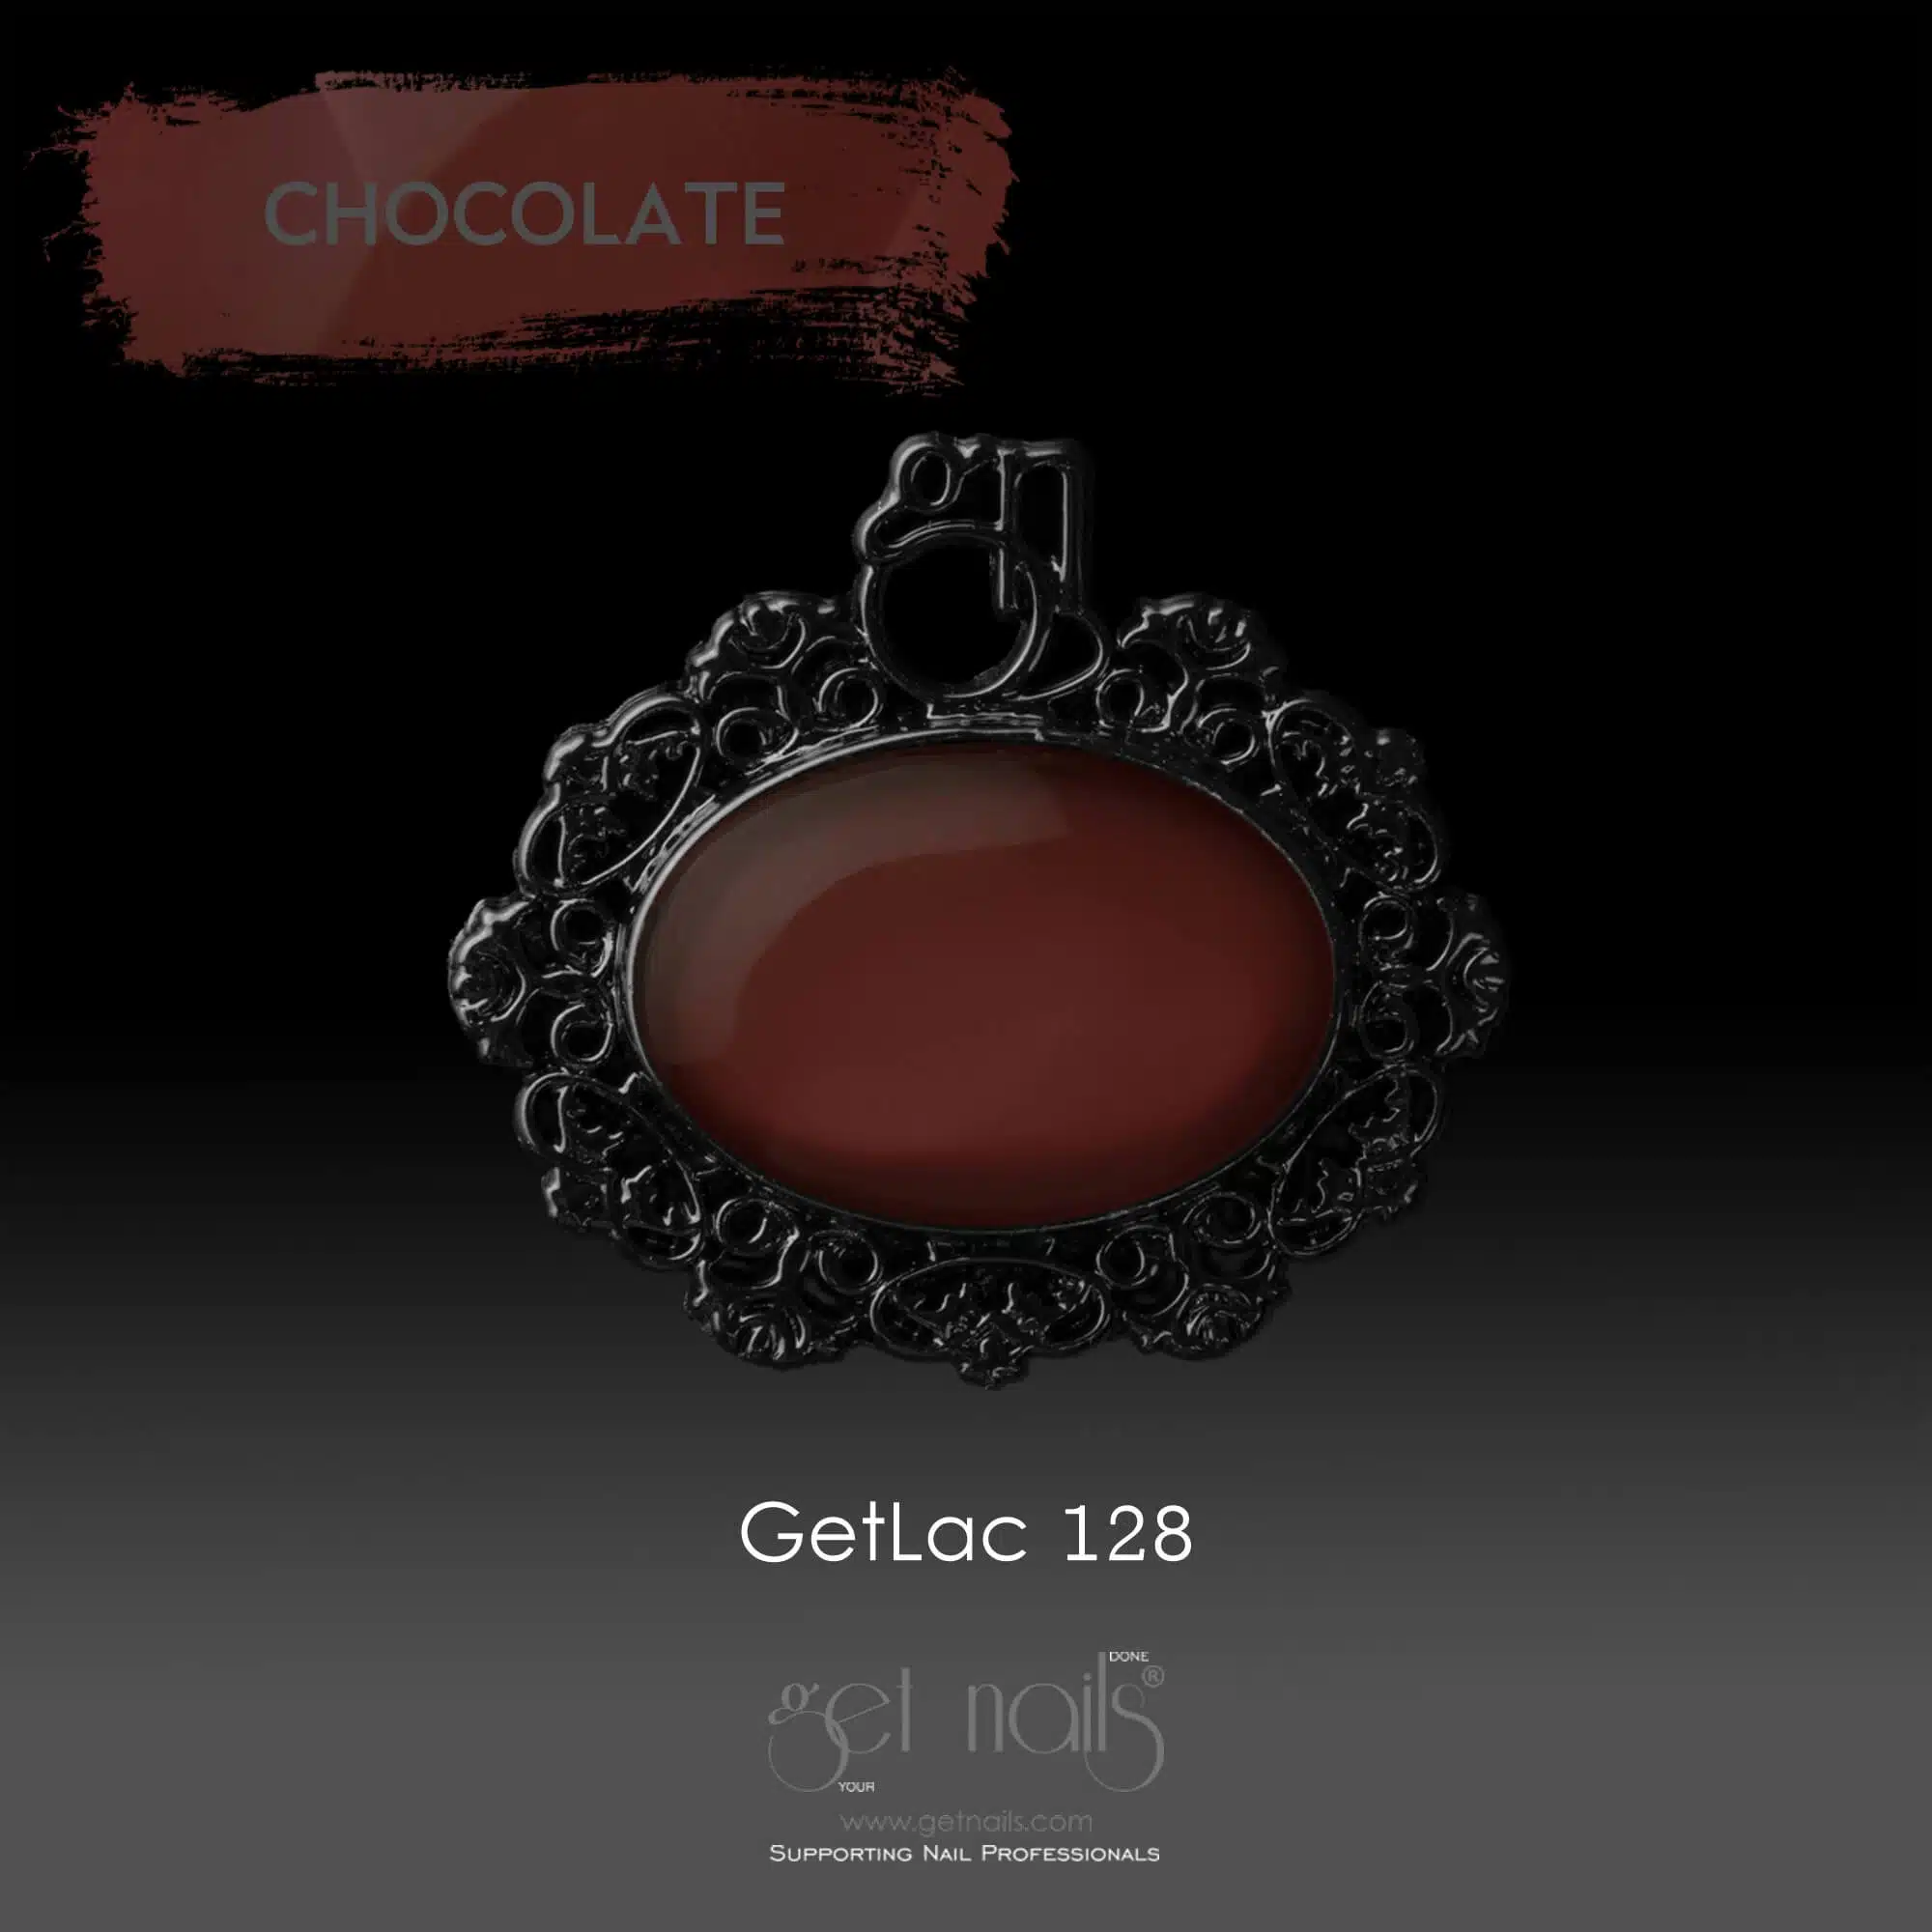 Get Nails Austria - GetLac 128 Chocolate 15g